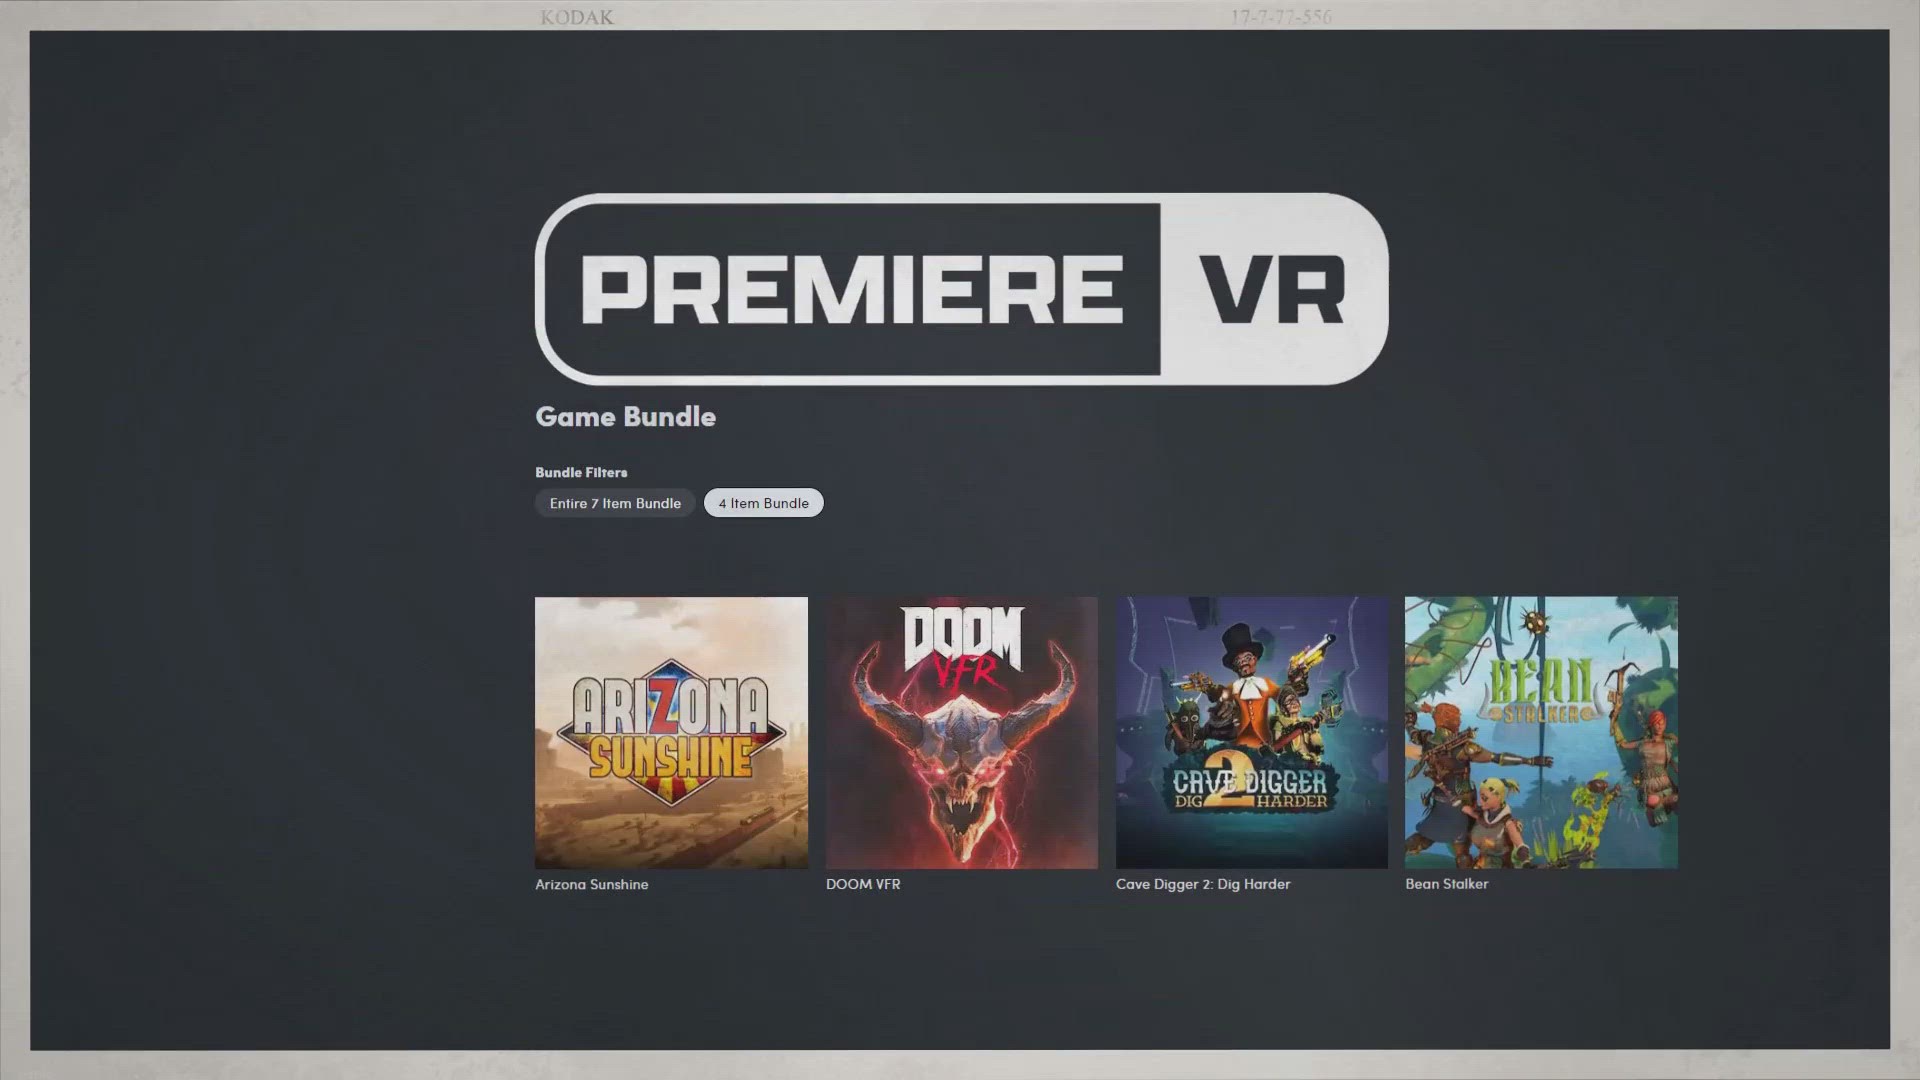 Humble Game Bundle: Premiere VR